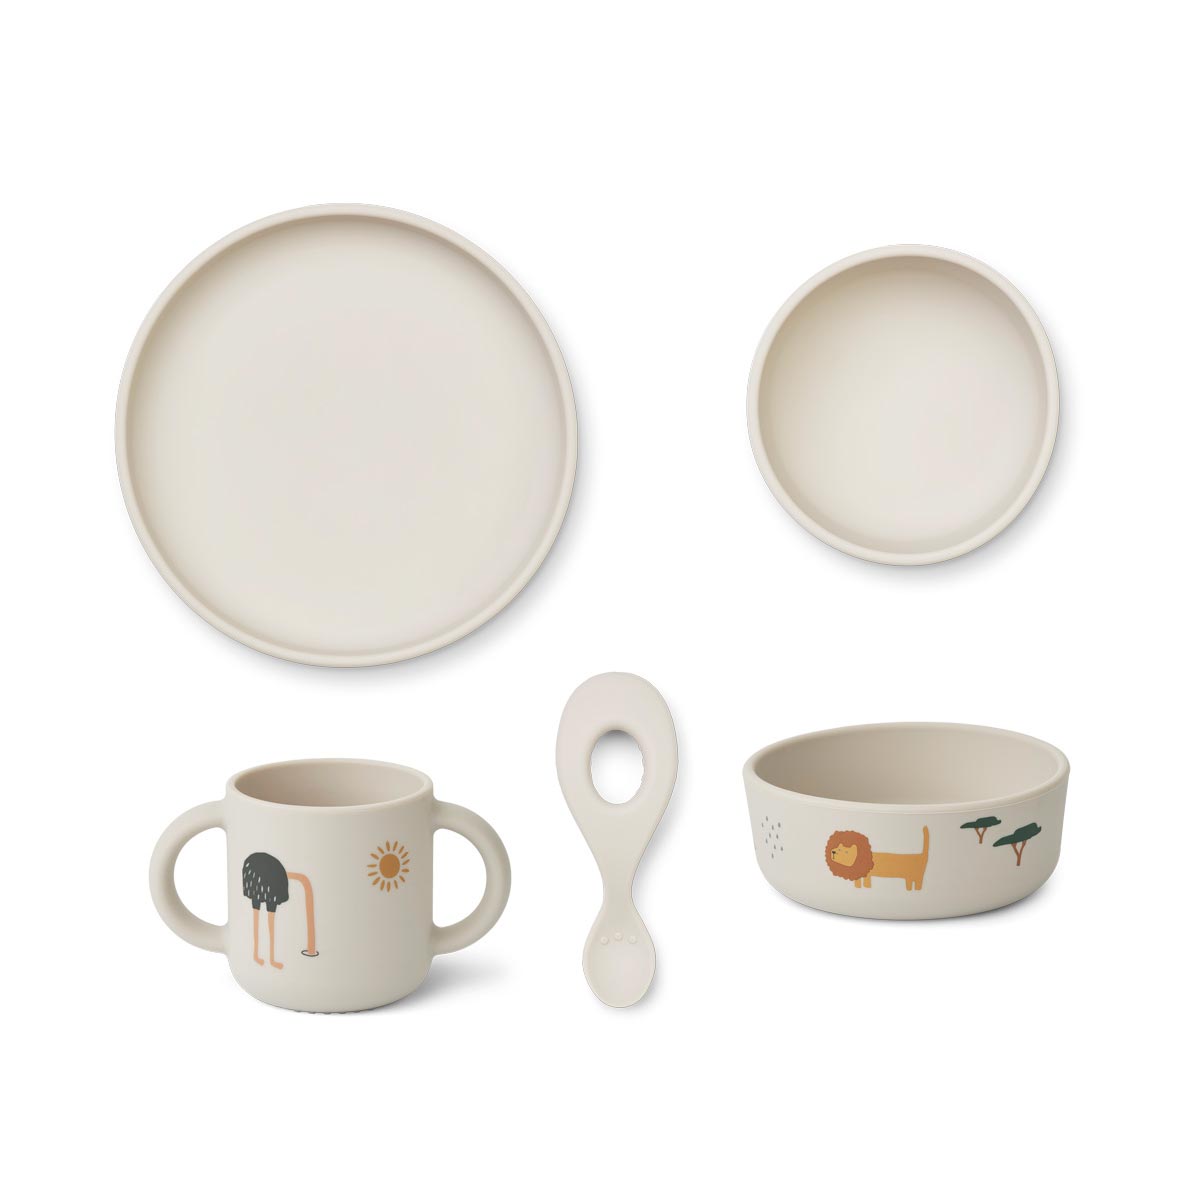 Vivi silicone dinnerware set